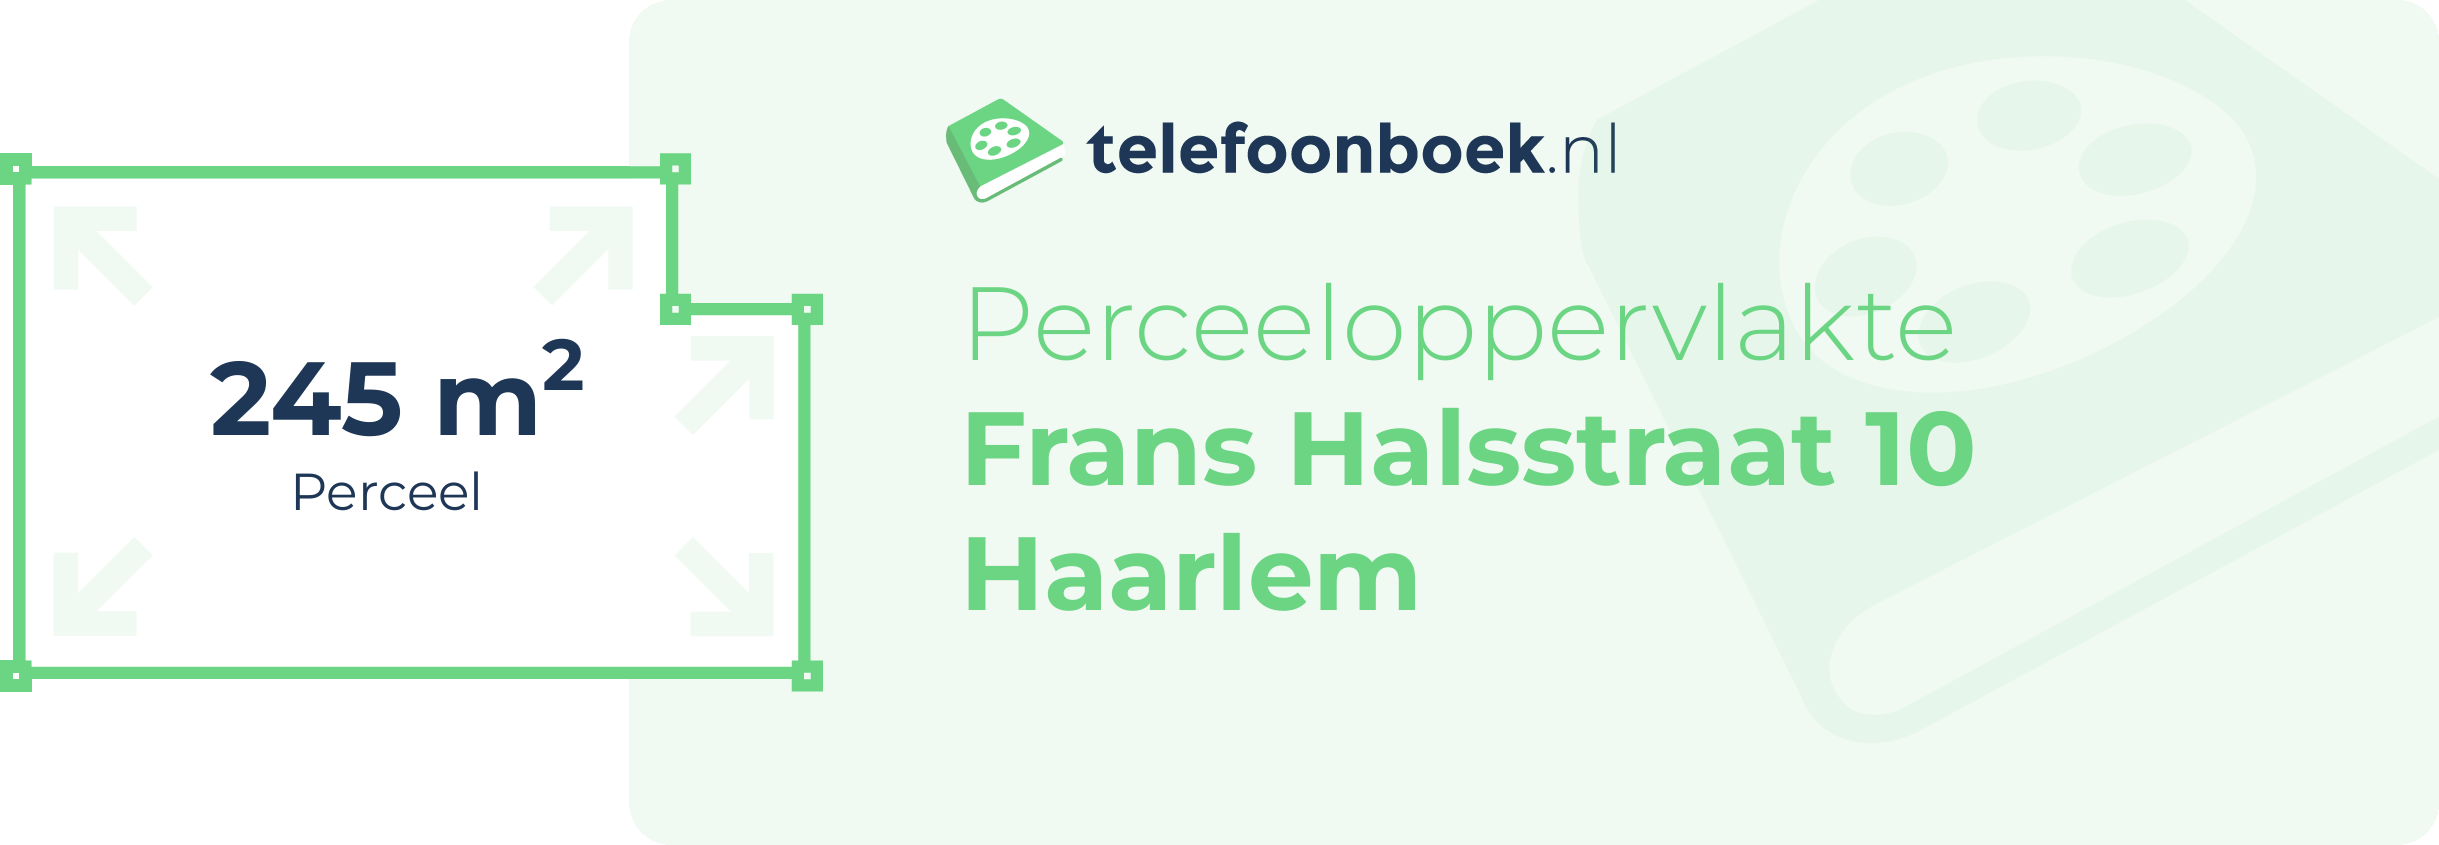 Perceeloppervlakte Frans Halsstraat 10 Haarlem